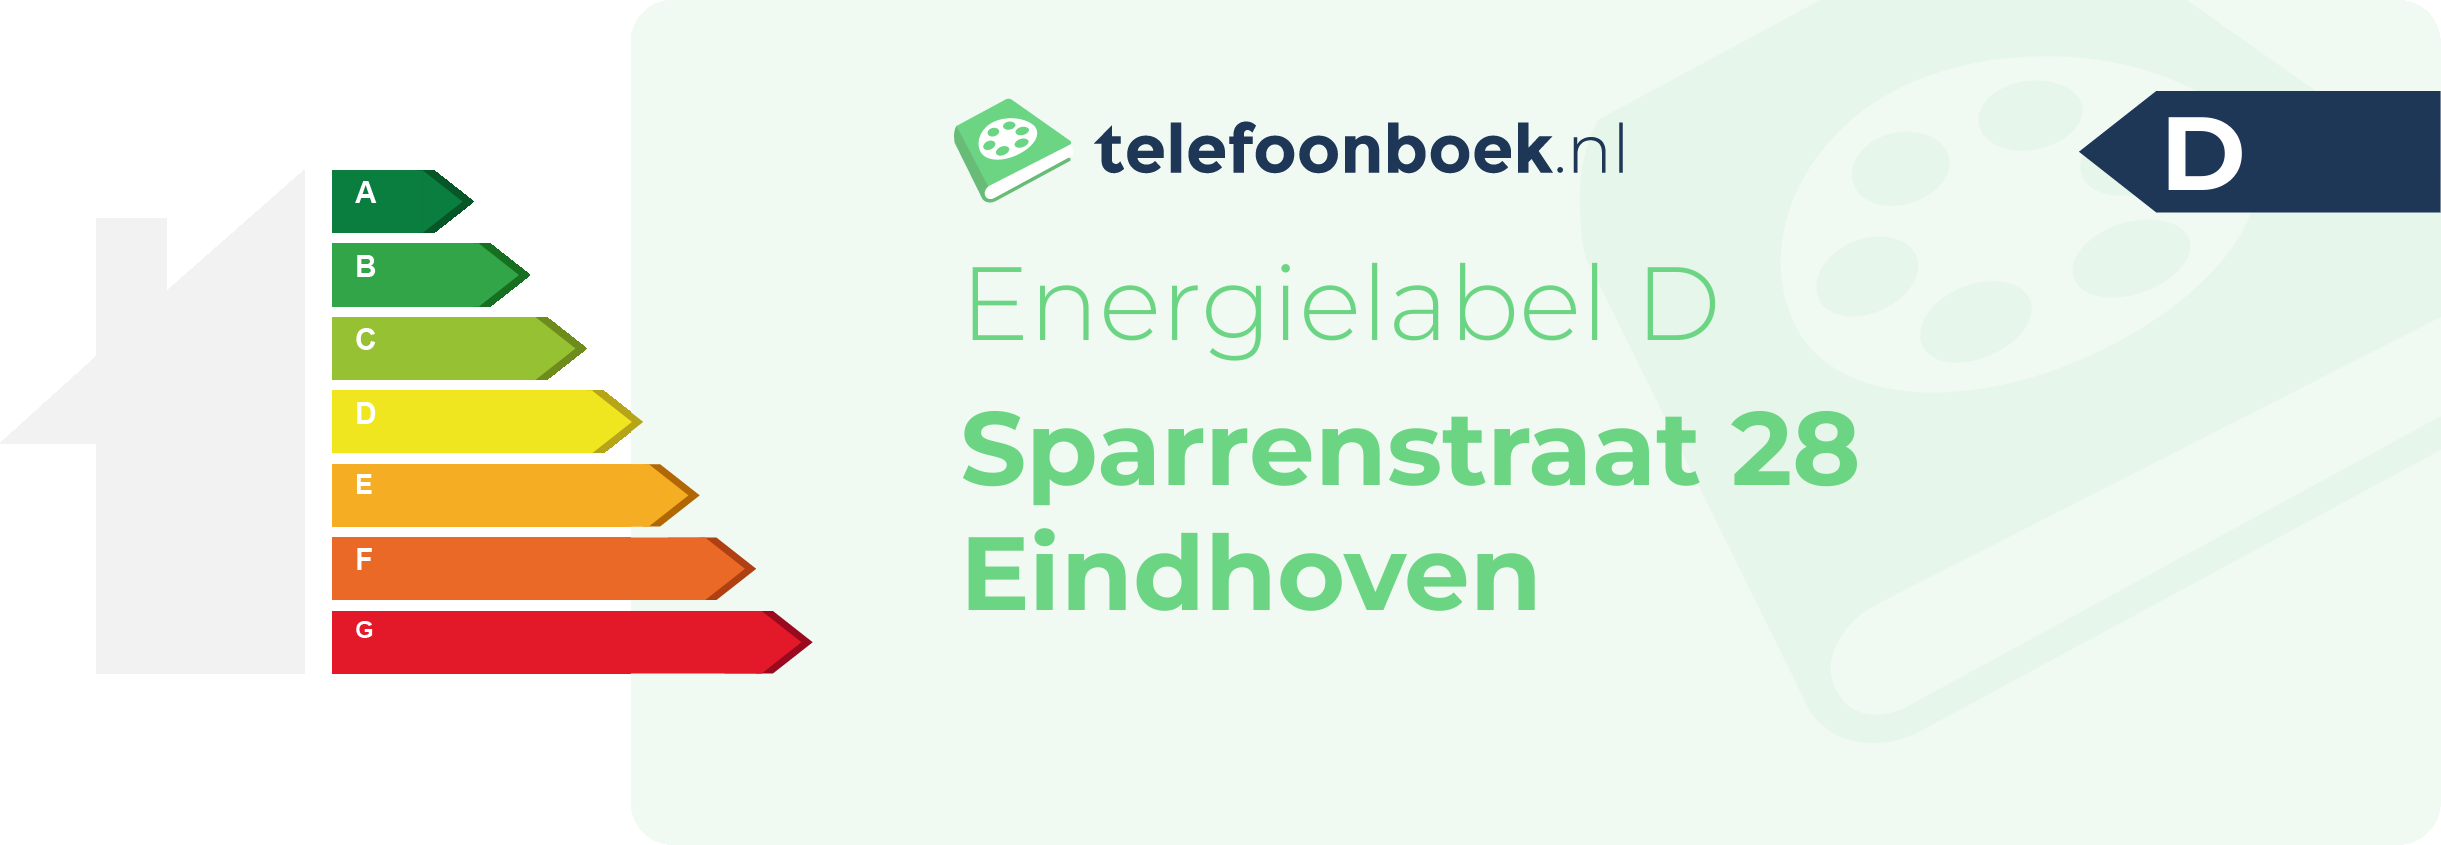 Energielabel Sparrenstraat 28 Eindhoven